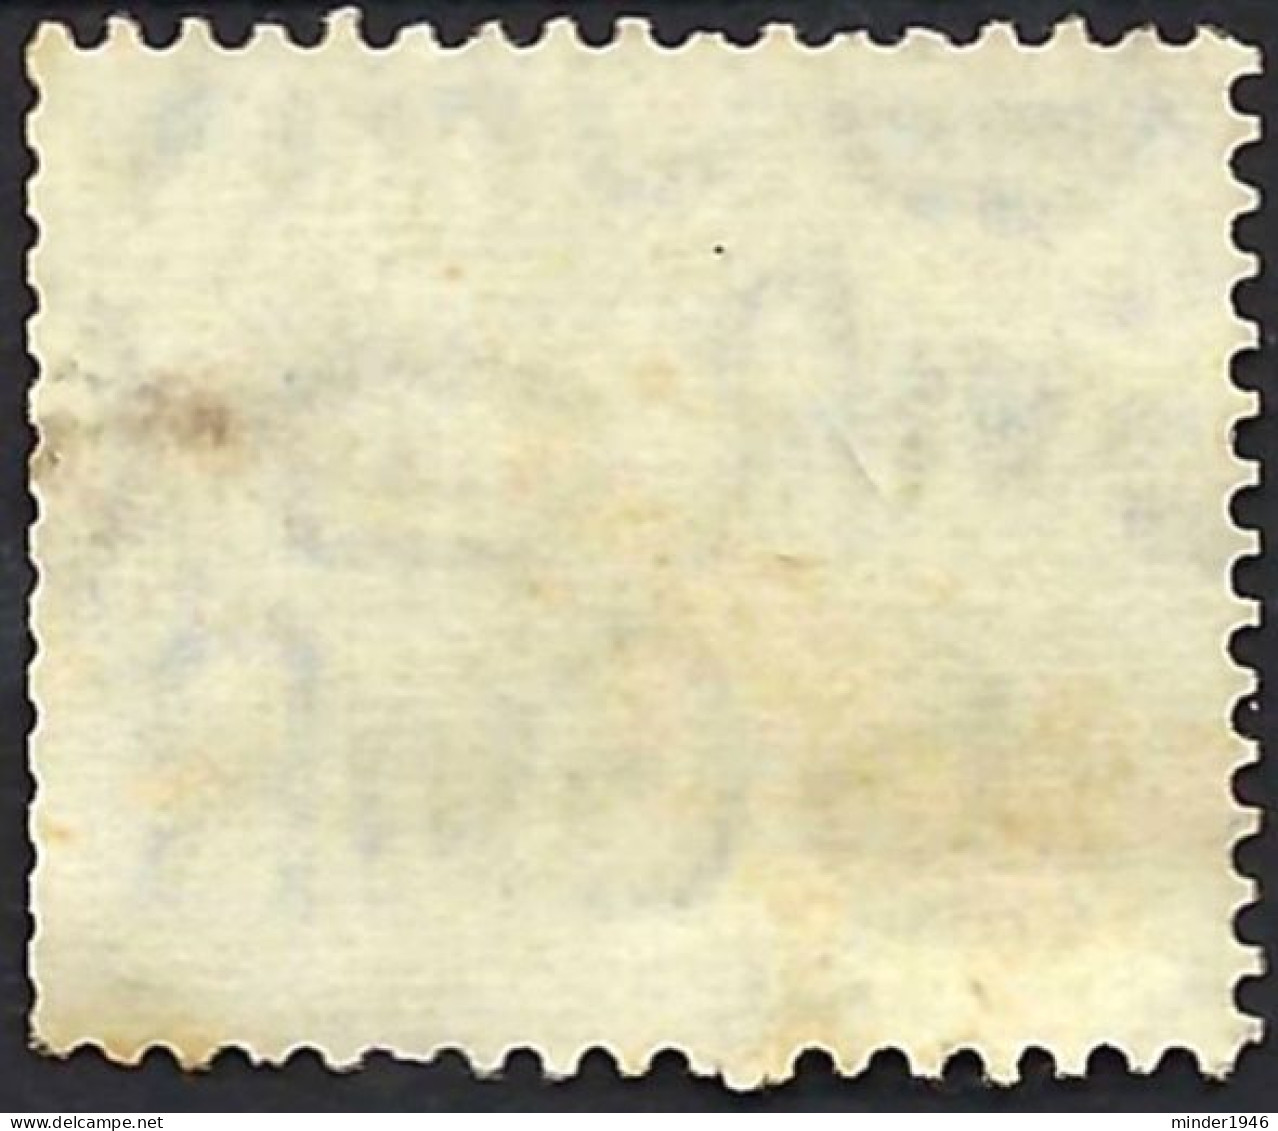 GREAT BRITAIN 1941 KGVI 2½d, Light Ultramarine Watermark Sideways SG489a FU - Unused Stamps